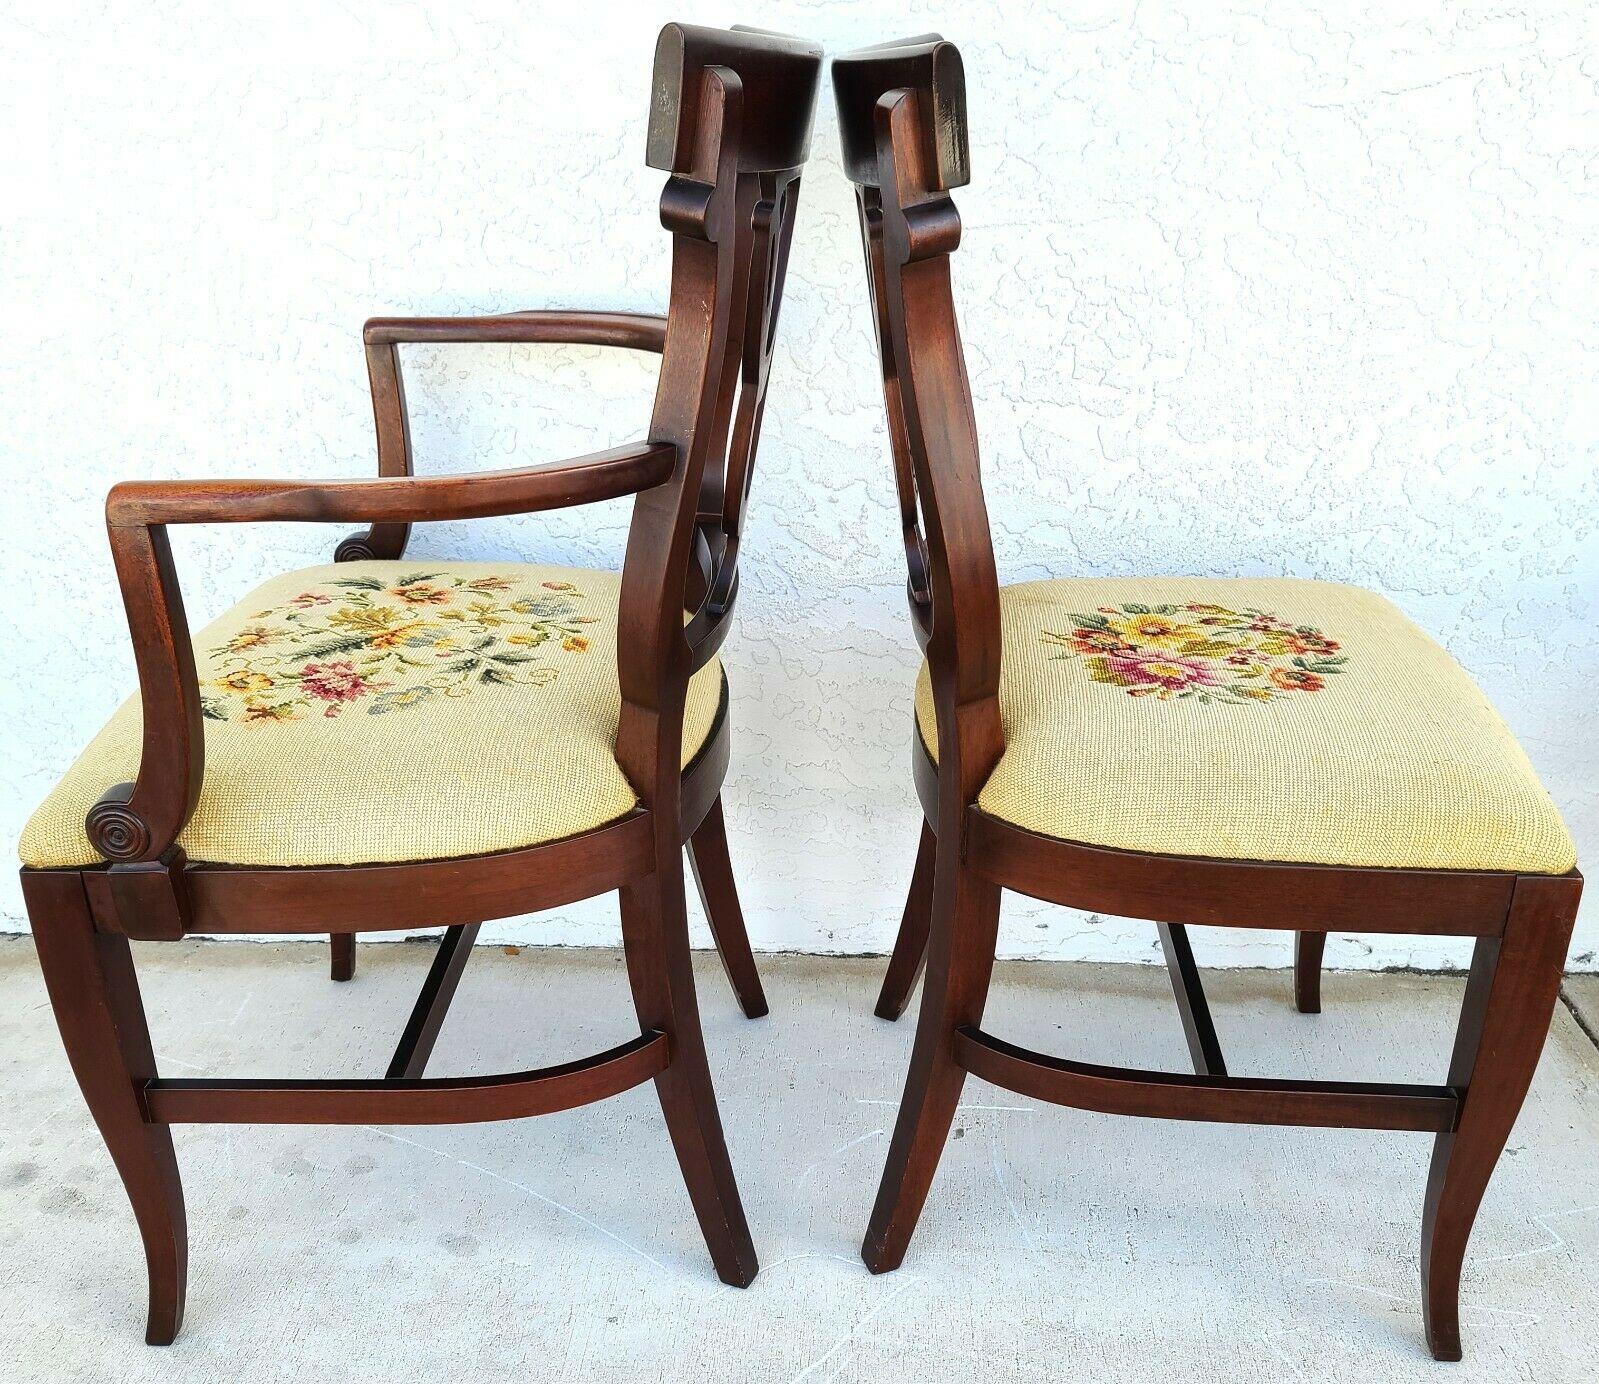 Antique 1920s Italian Regency Mahogany Dining Chairs with Needlepoint -Set of 6 6